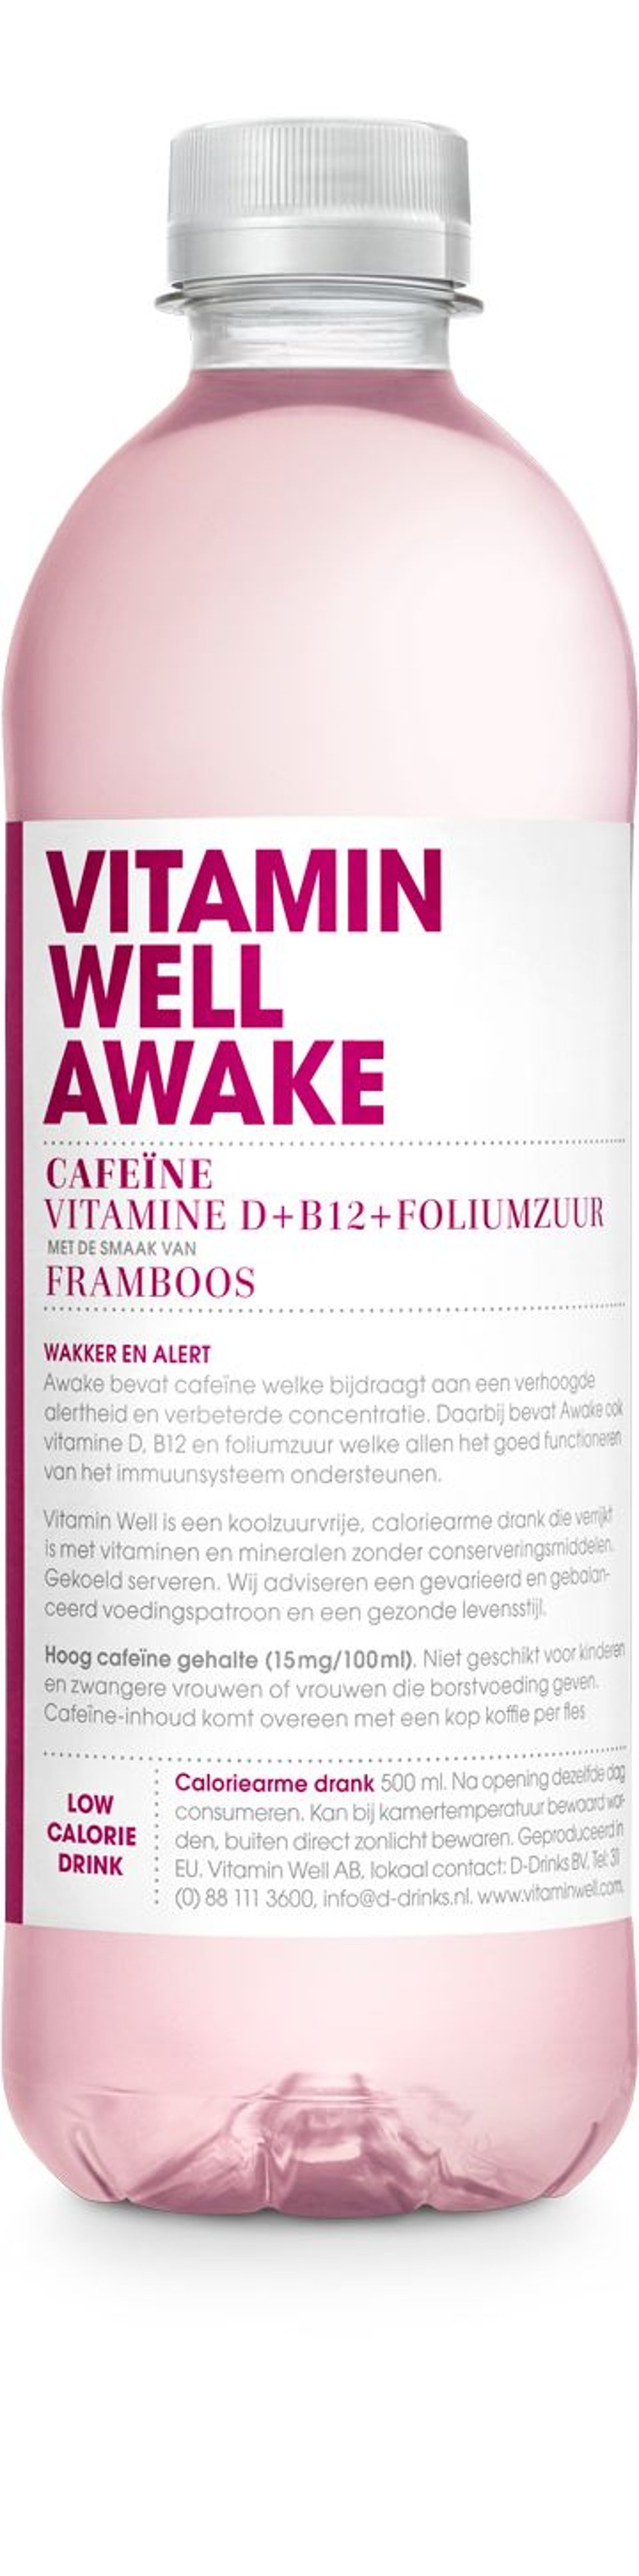 Vitamin Well: AWAKE FRAMBOOS